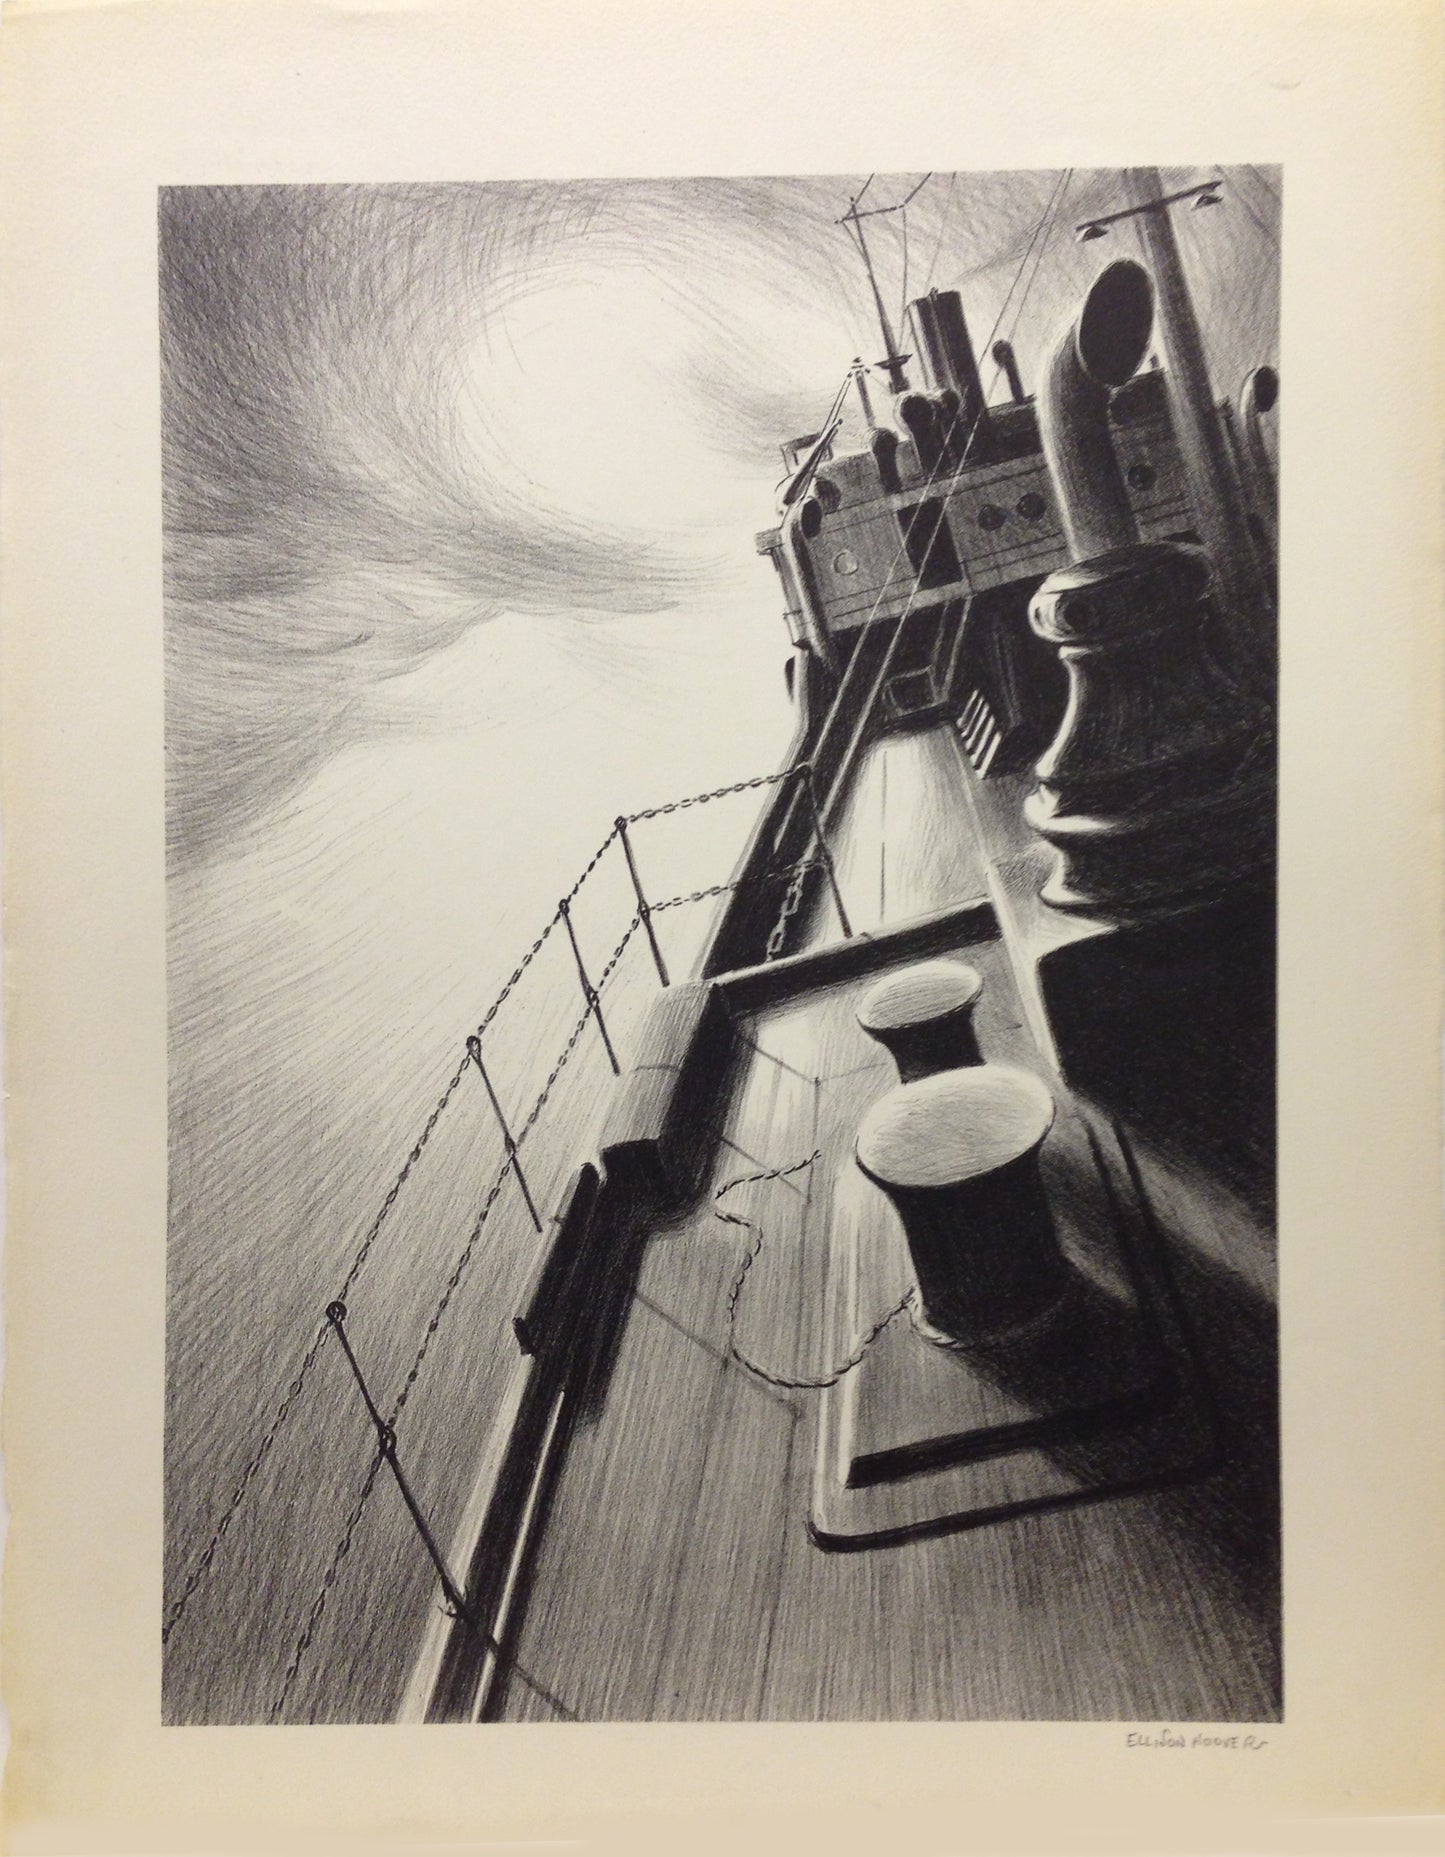 "Cargo Ship" by Ellison Hoover